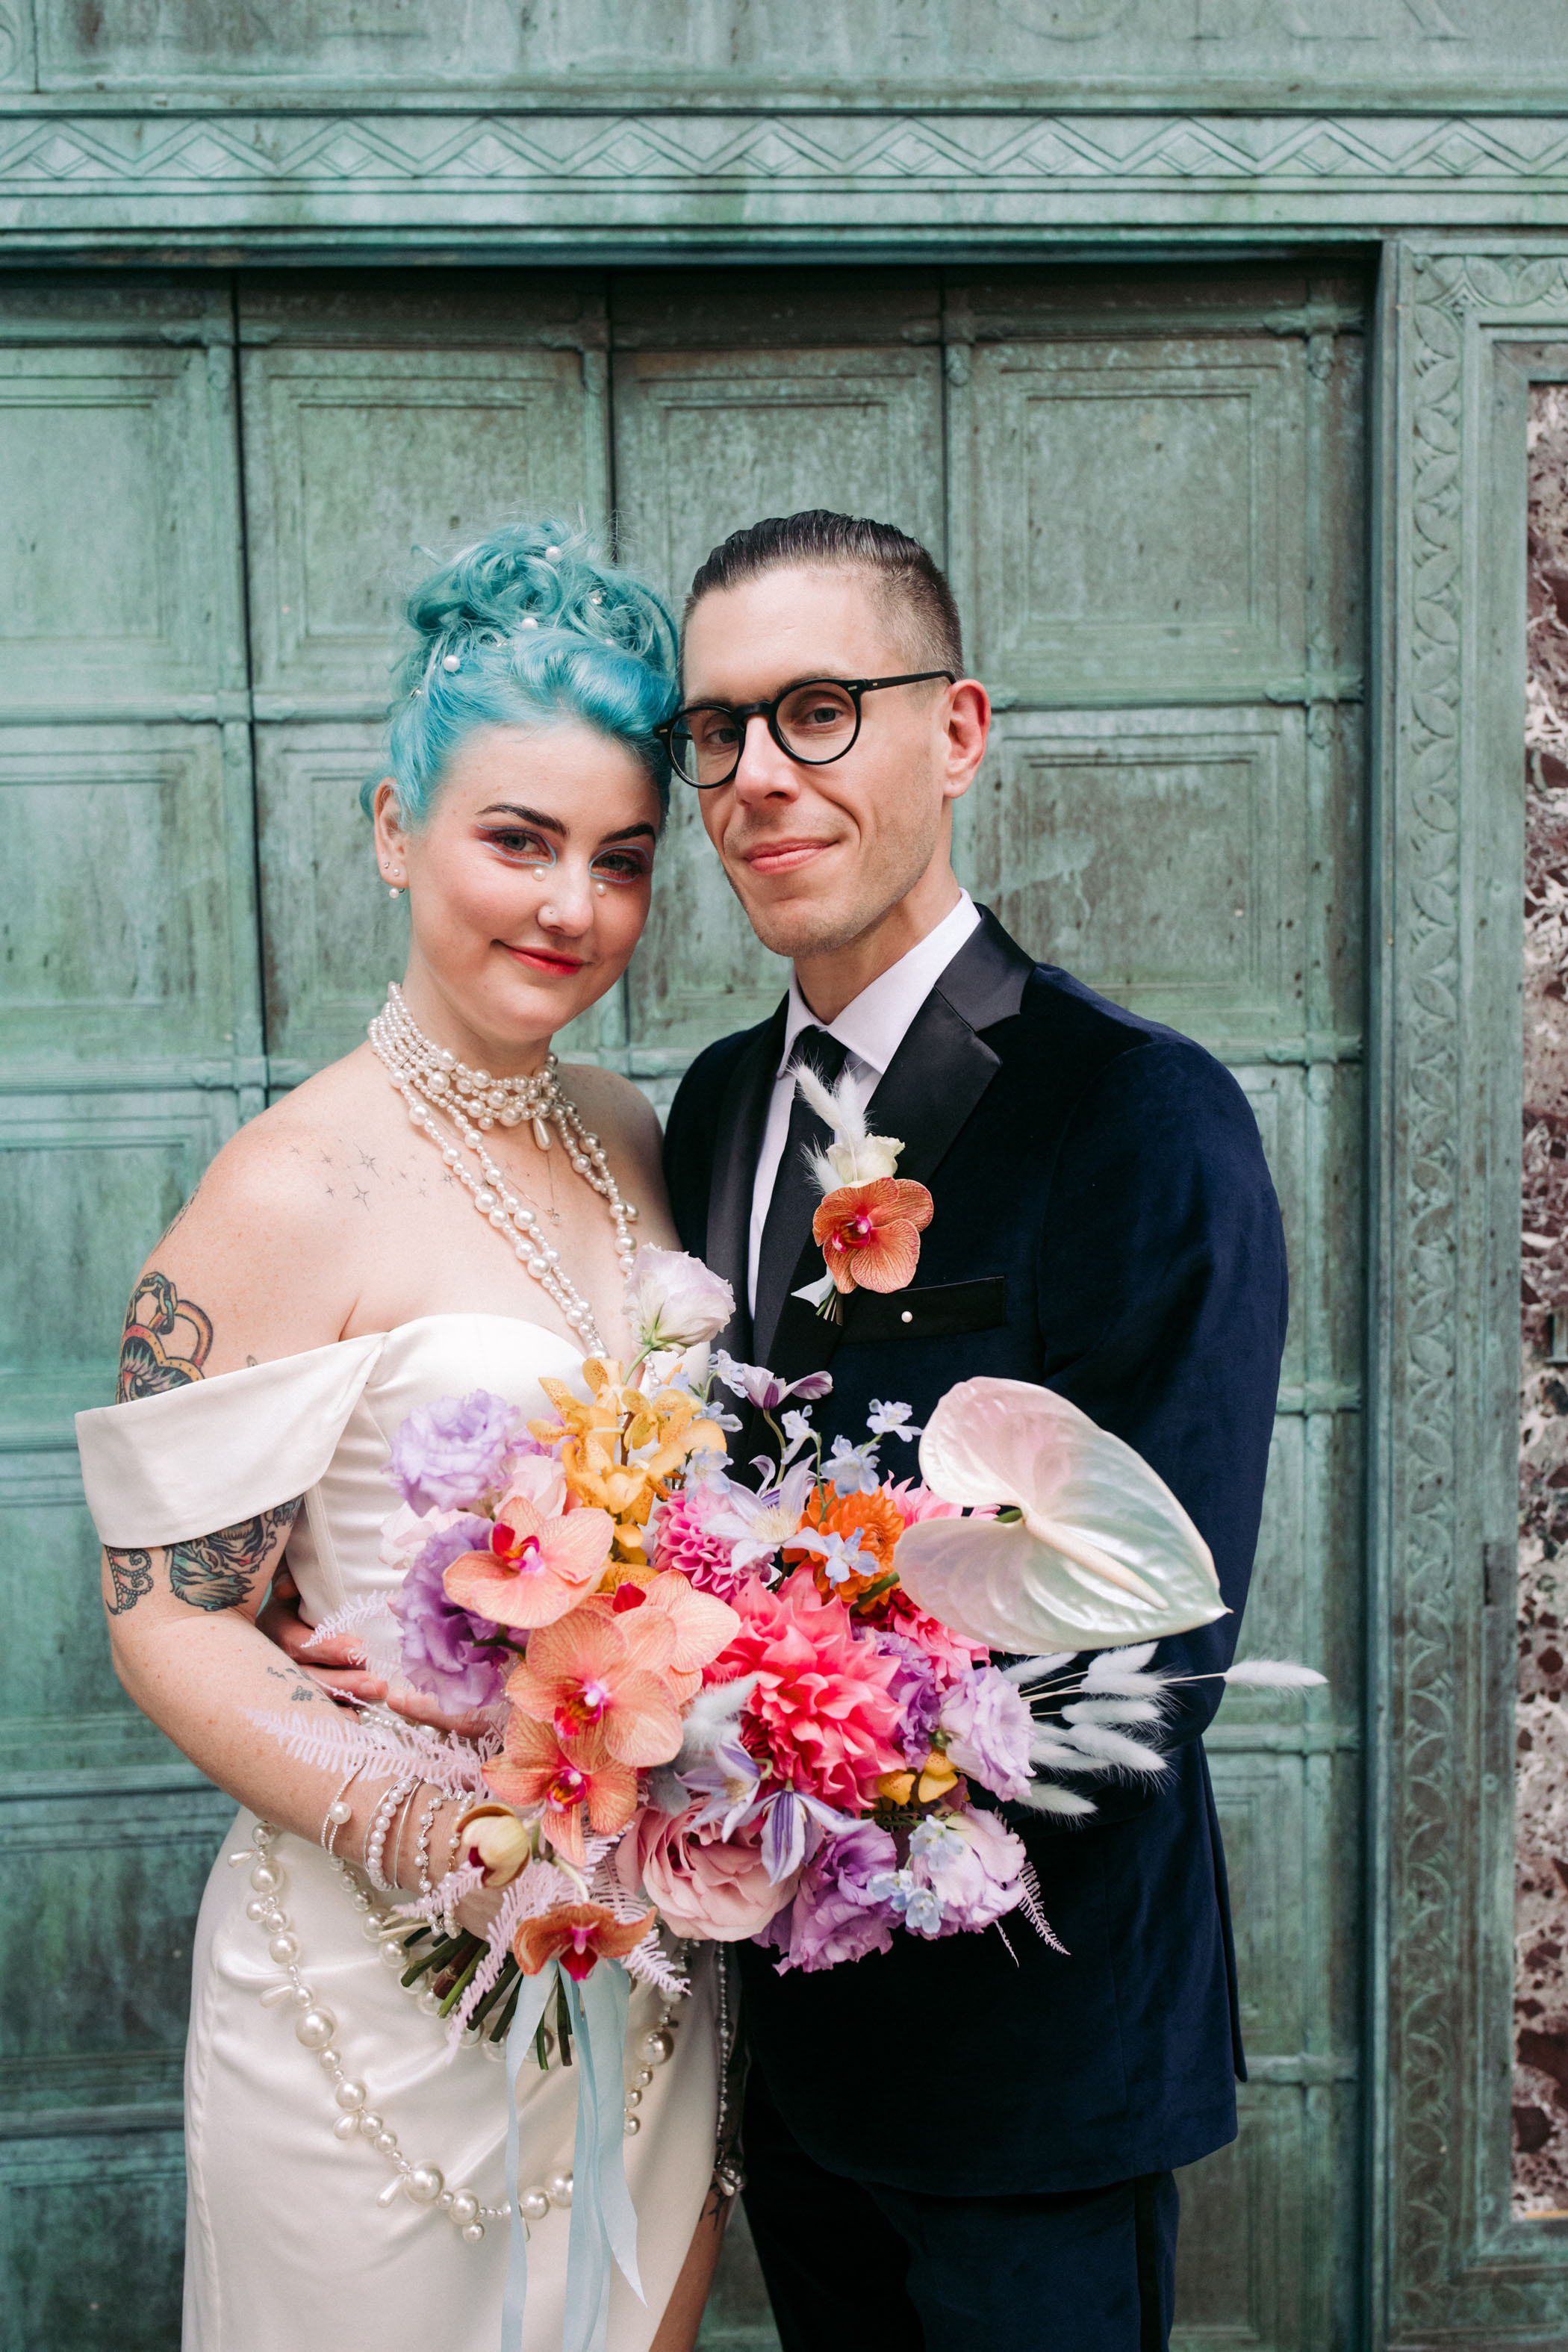 Colorful wedding makeup and hair